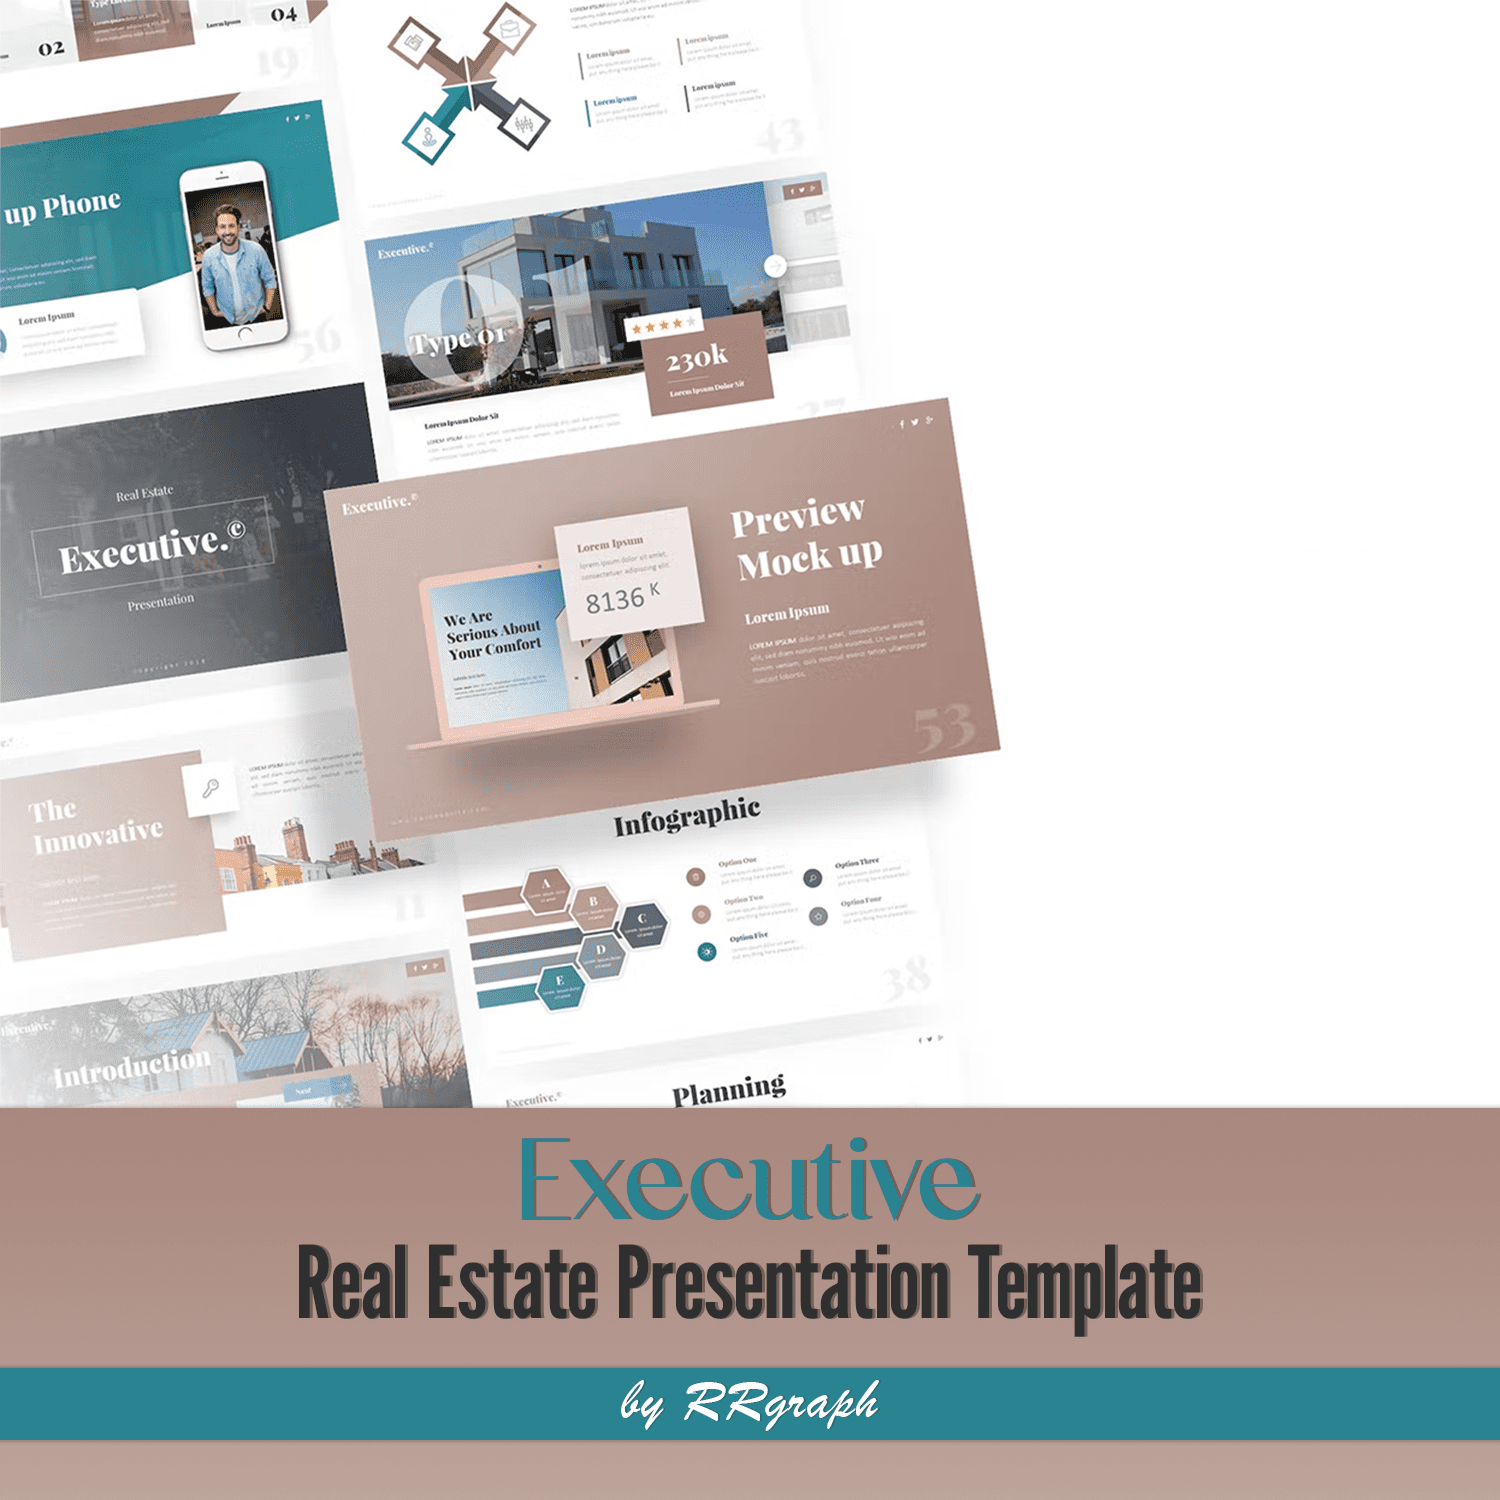 Executive - Real Estate Presentation Template Cover.